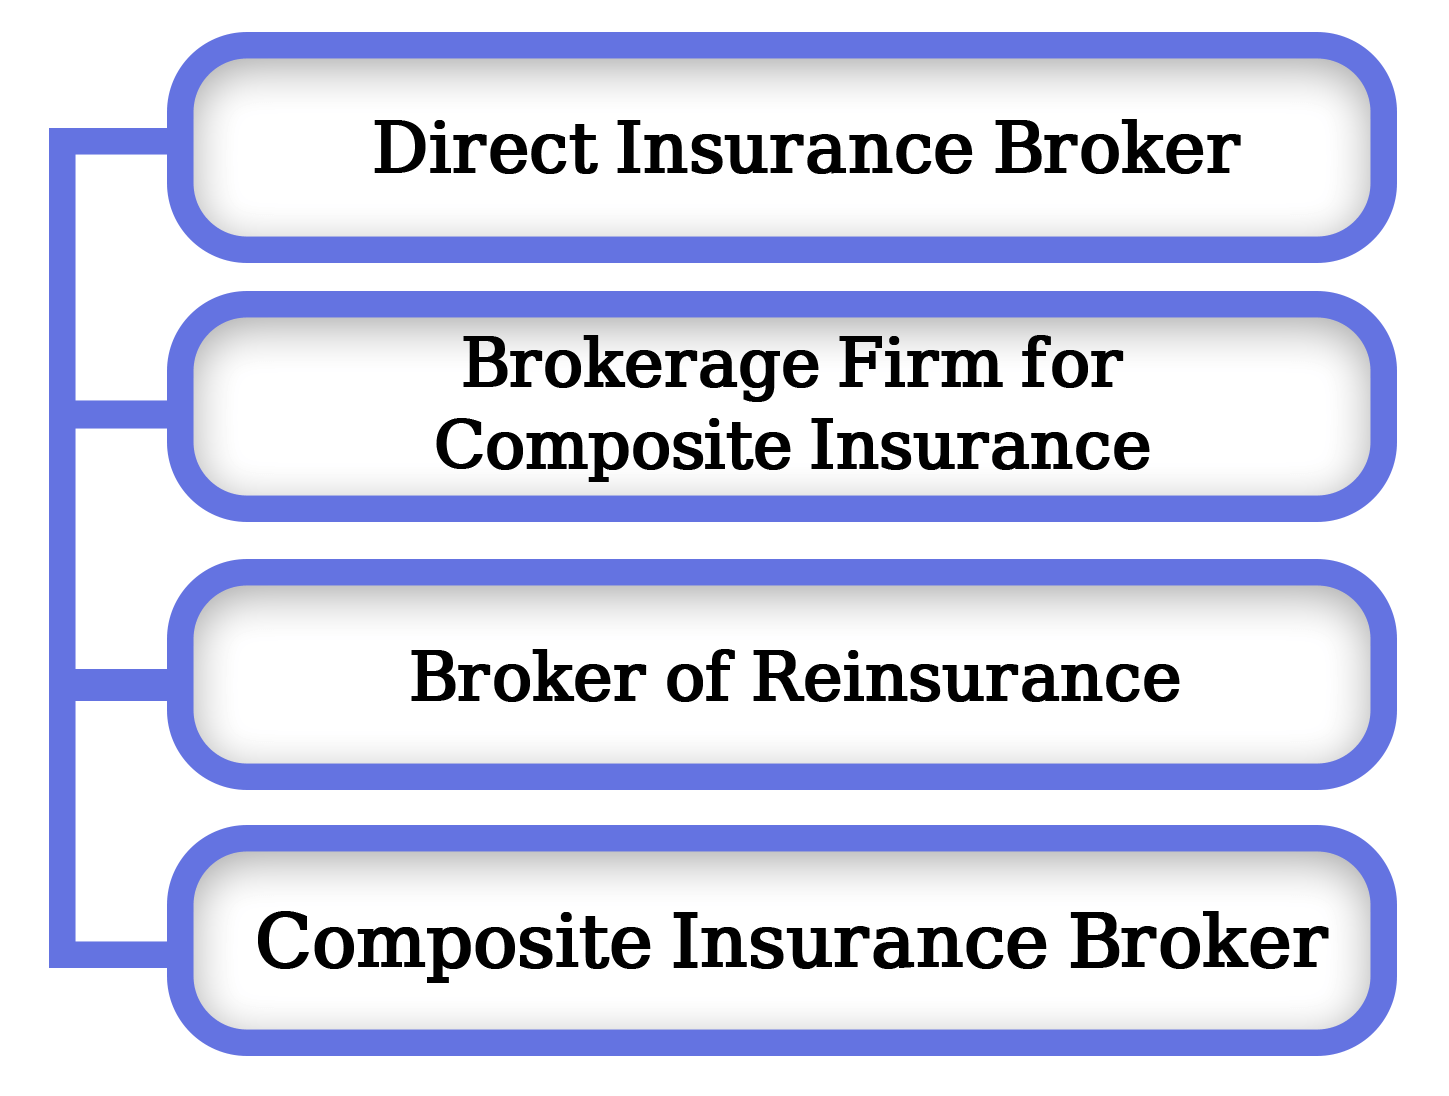 Types of Insurance Broker License